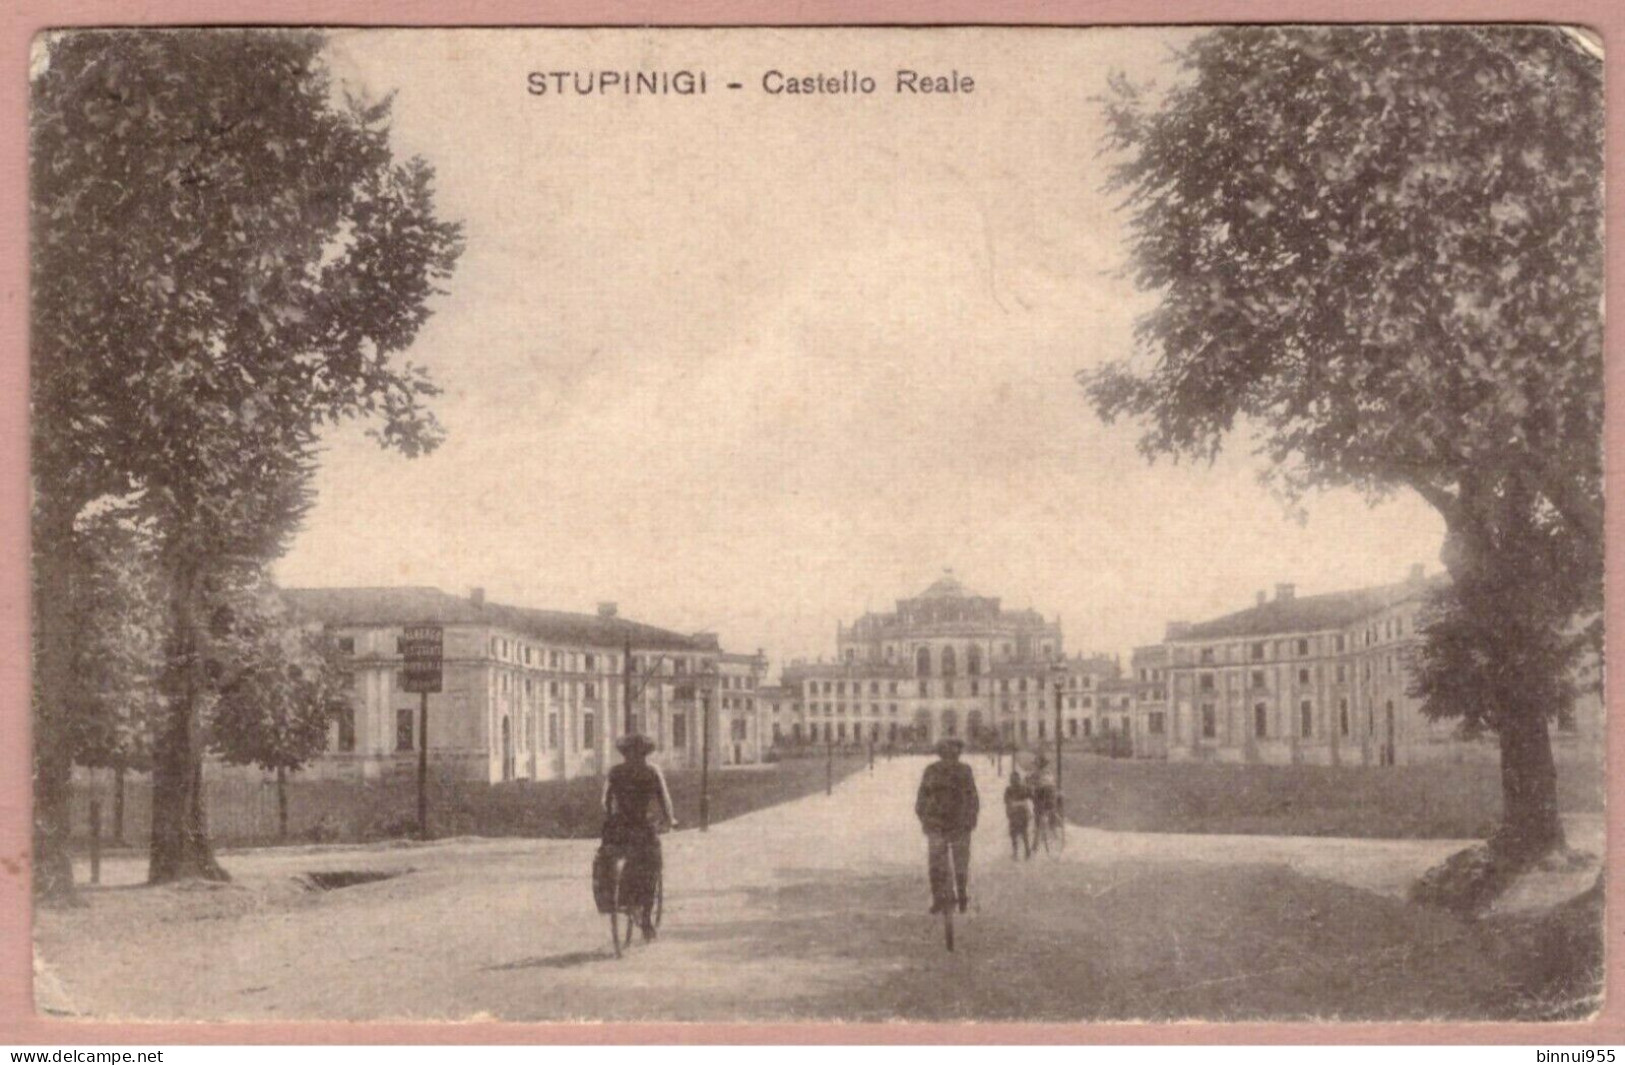 Cartolina Stupinigi Castello Reale - Viaggiata 1917 - Mehransichten, Panoramakarten